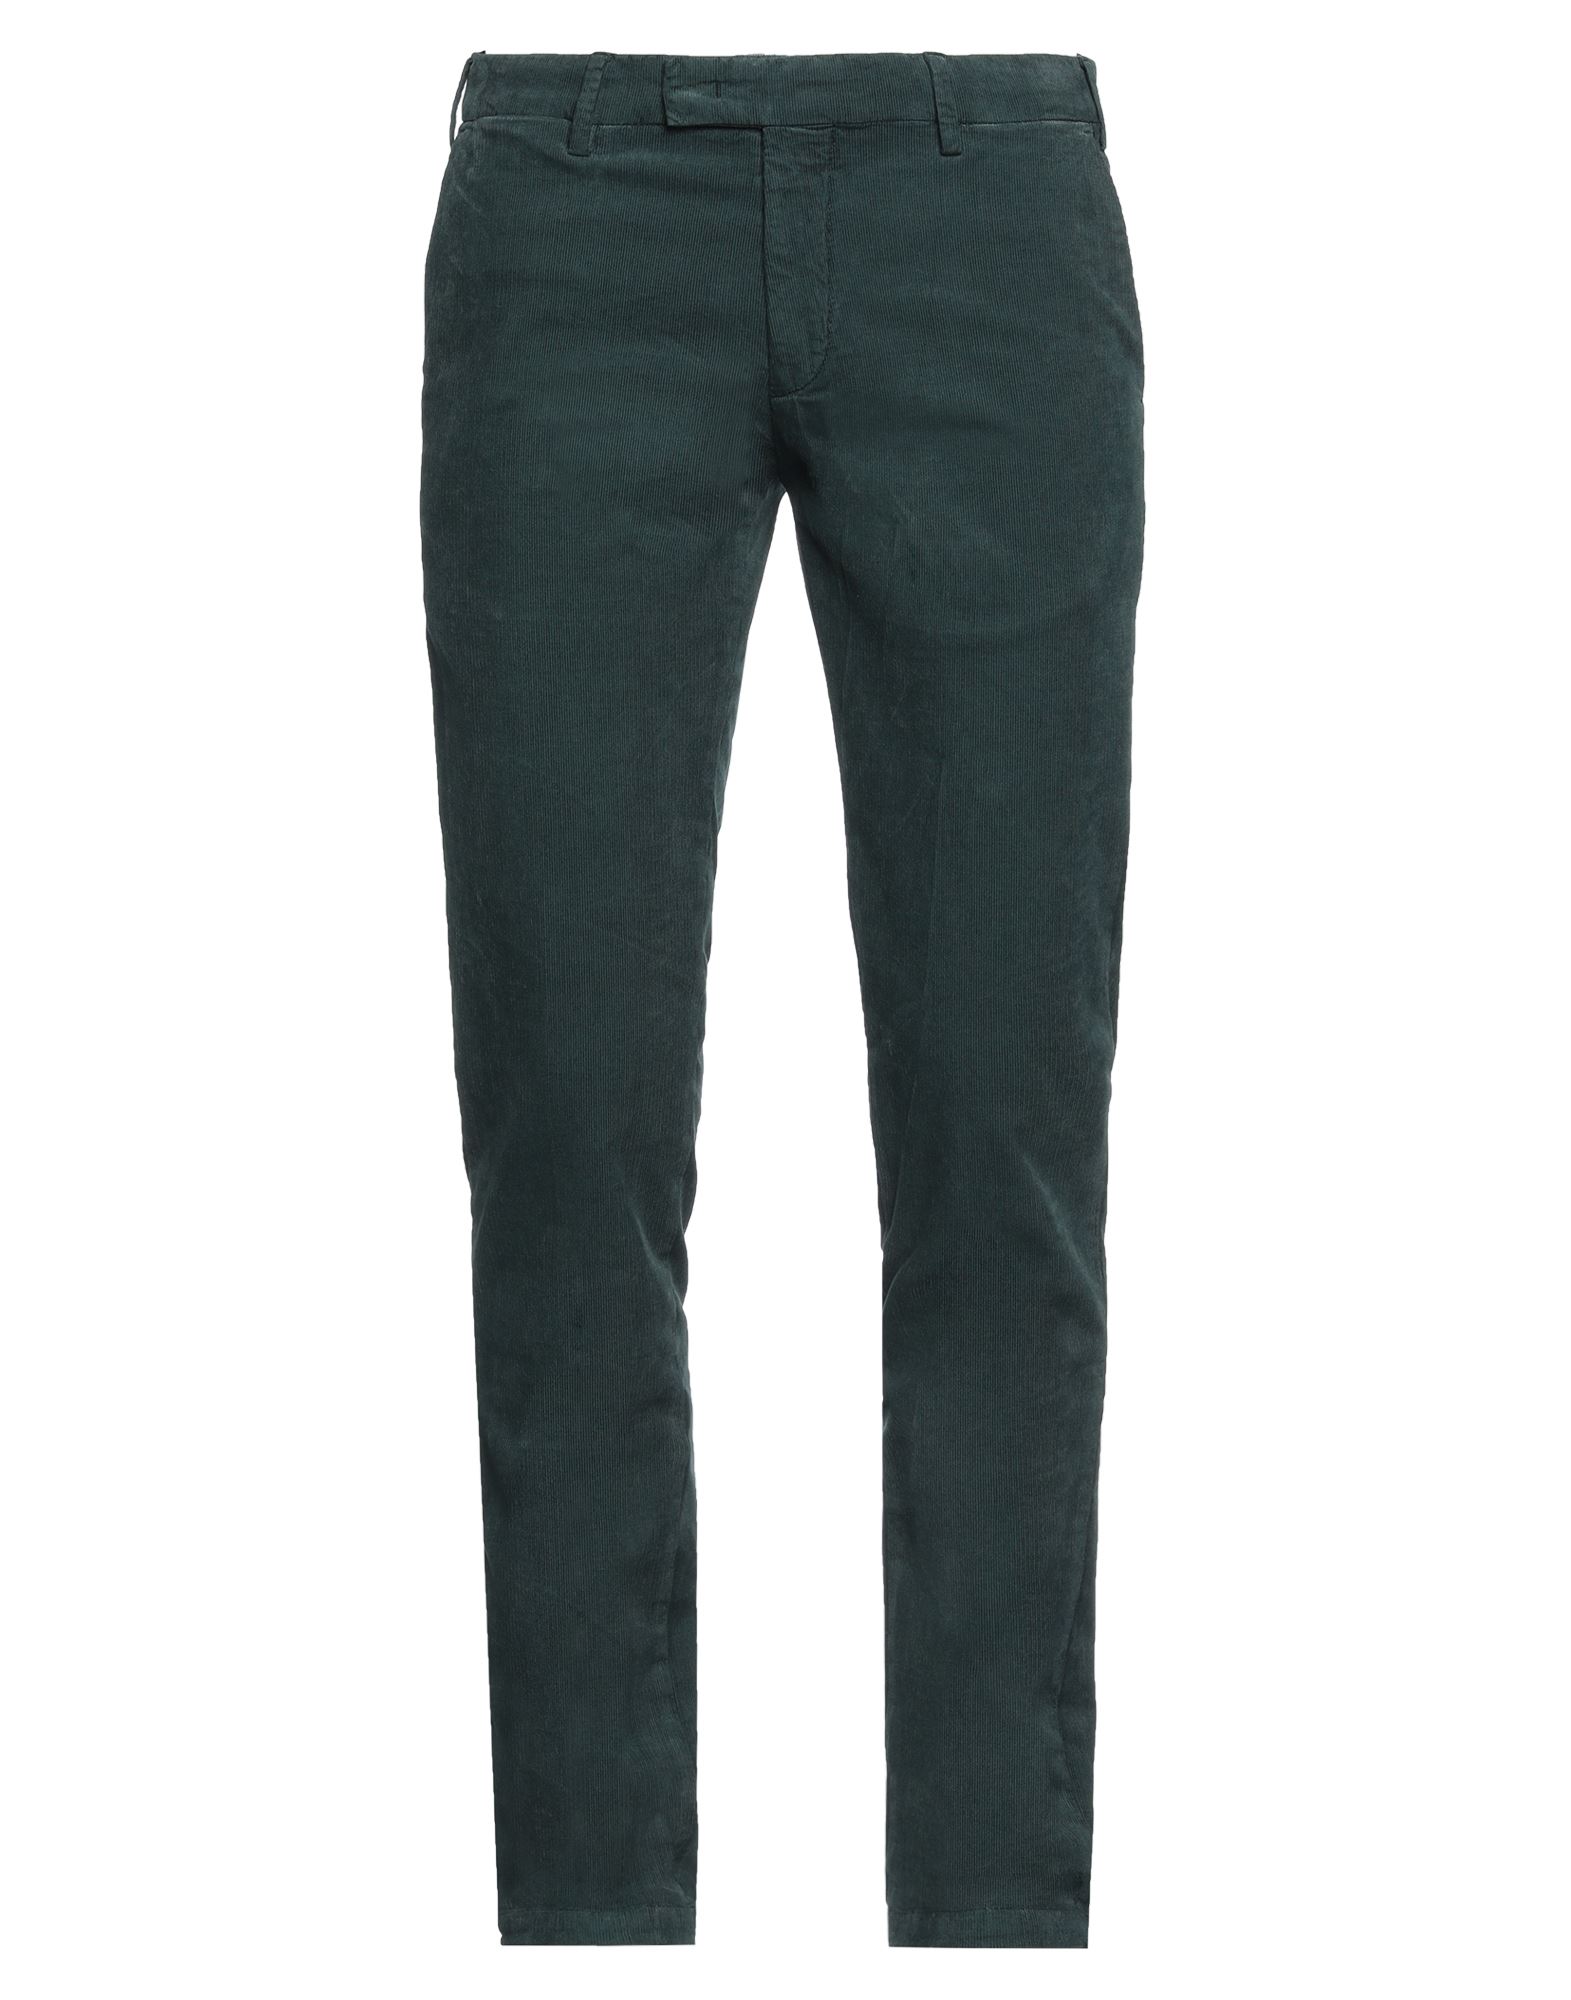 Sp1 Pants In Dark Green